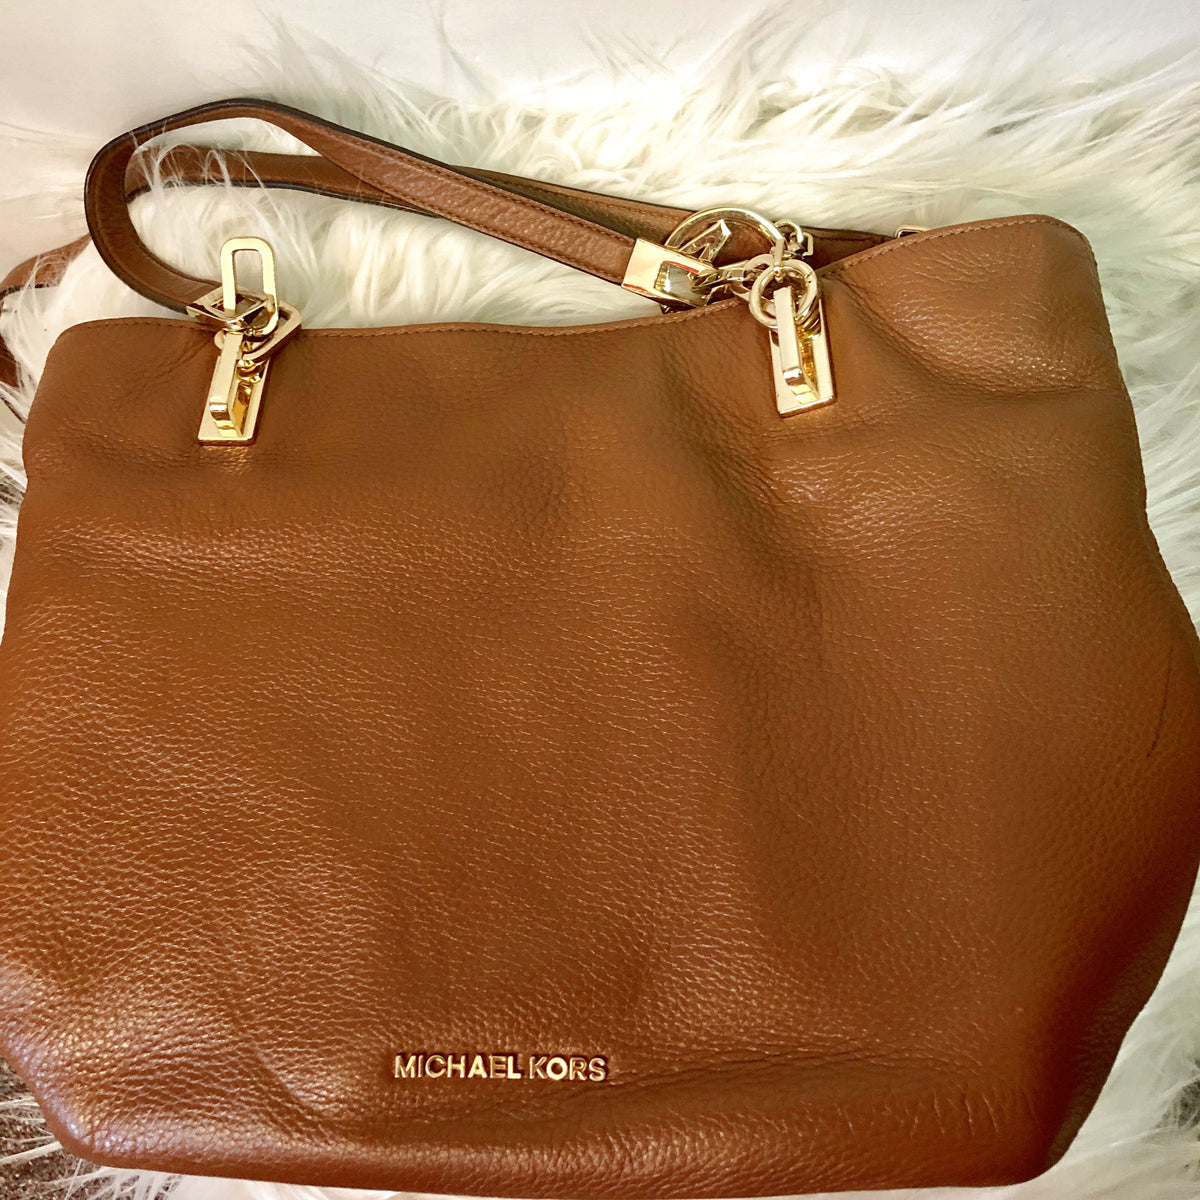 brown leather michael kors purse